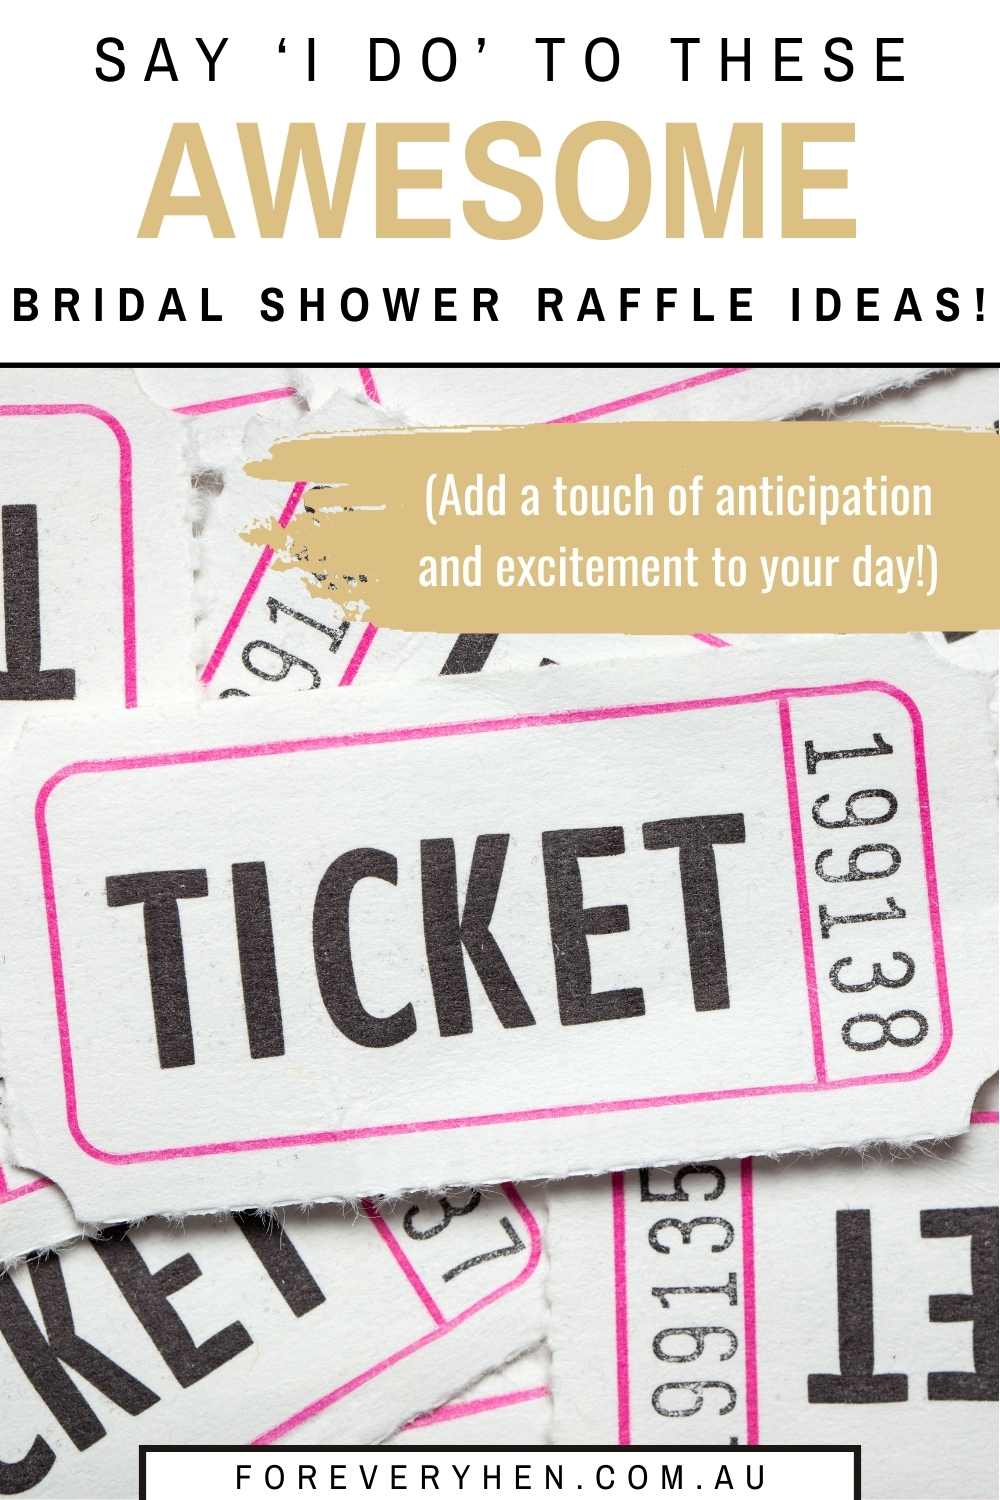 Bridal Shower Raffle Ideas Pinterest Pin